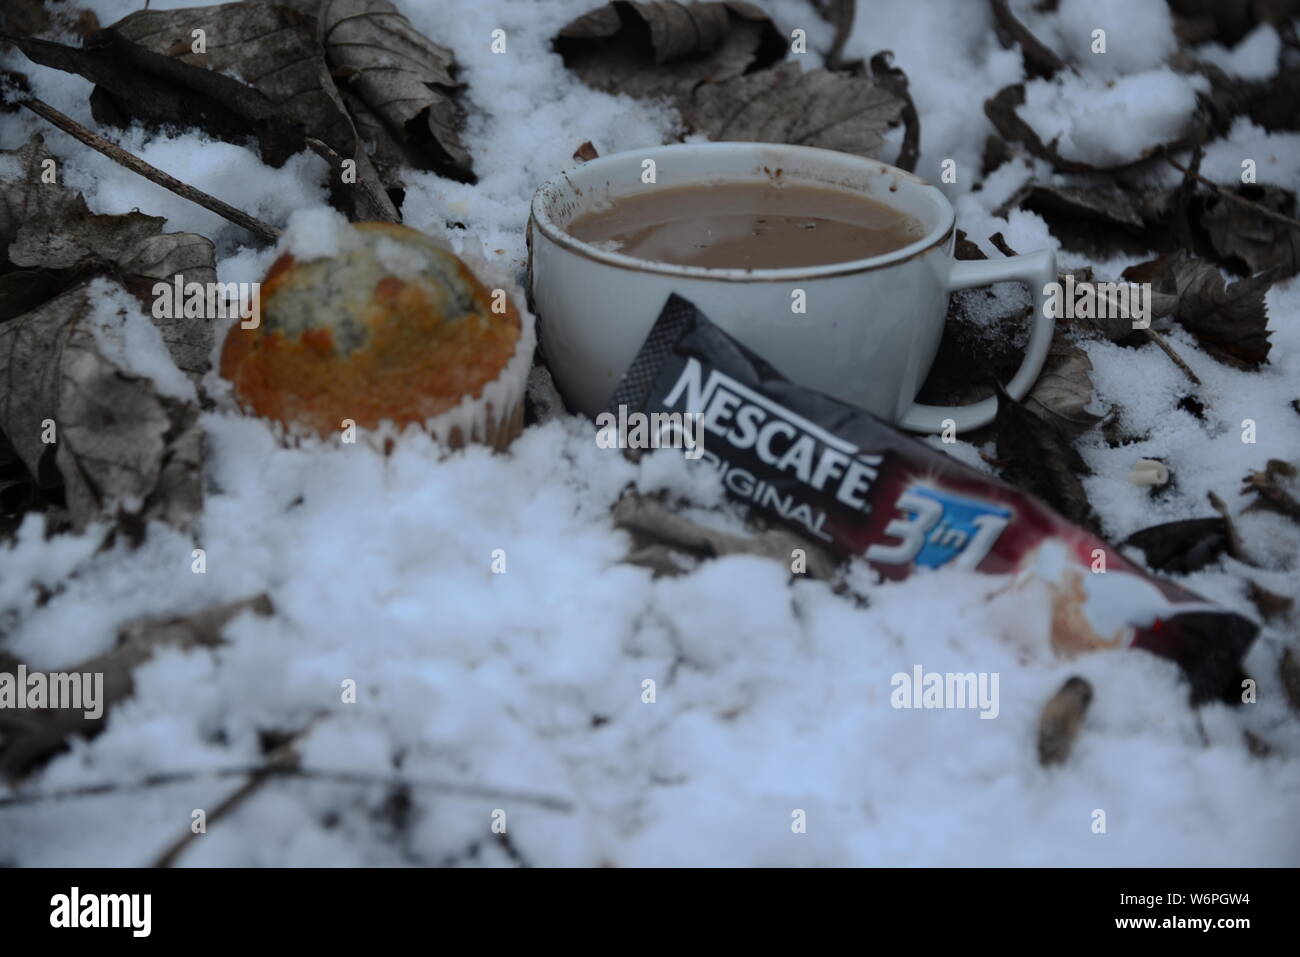 These winter-seasonal coffee drinks are snow joke in San Jose, California